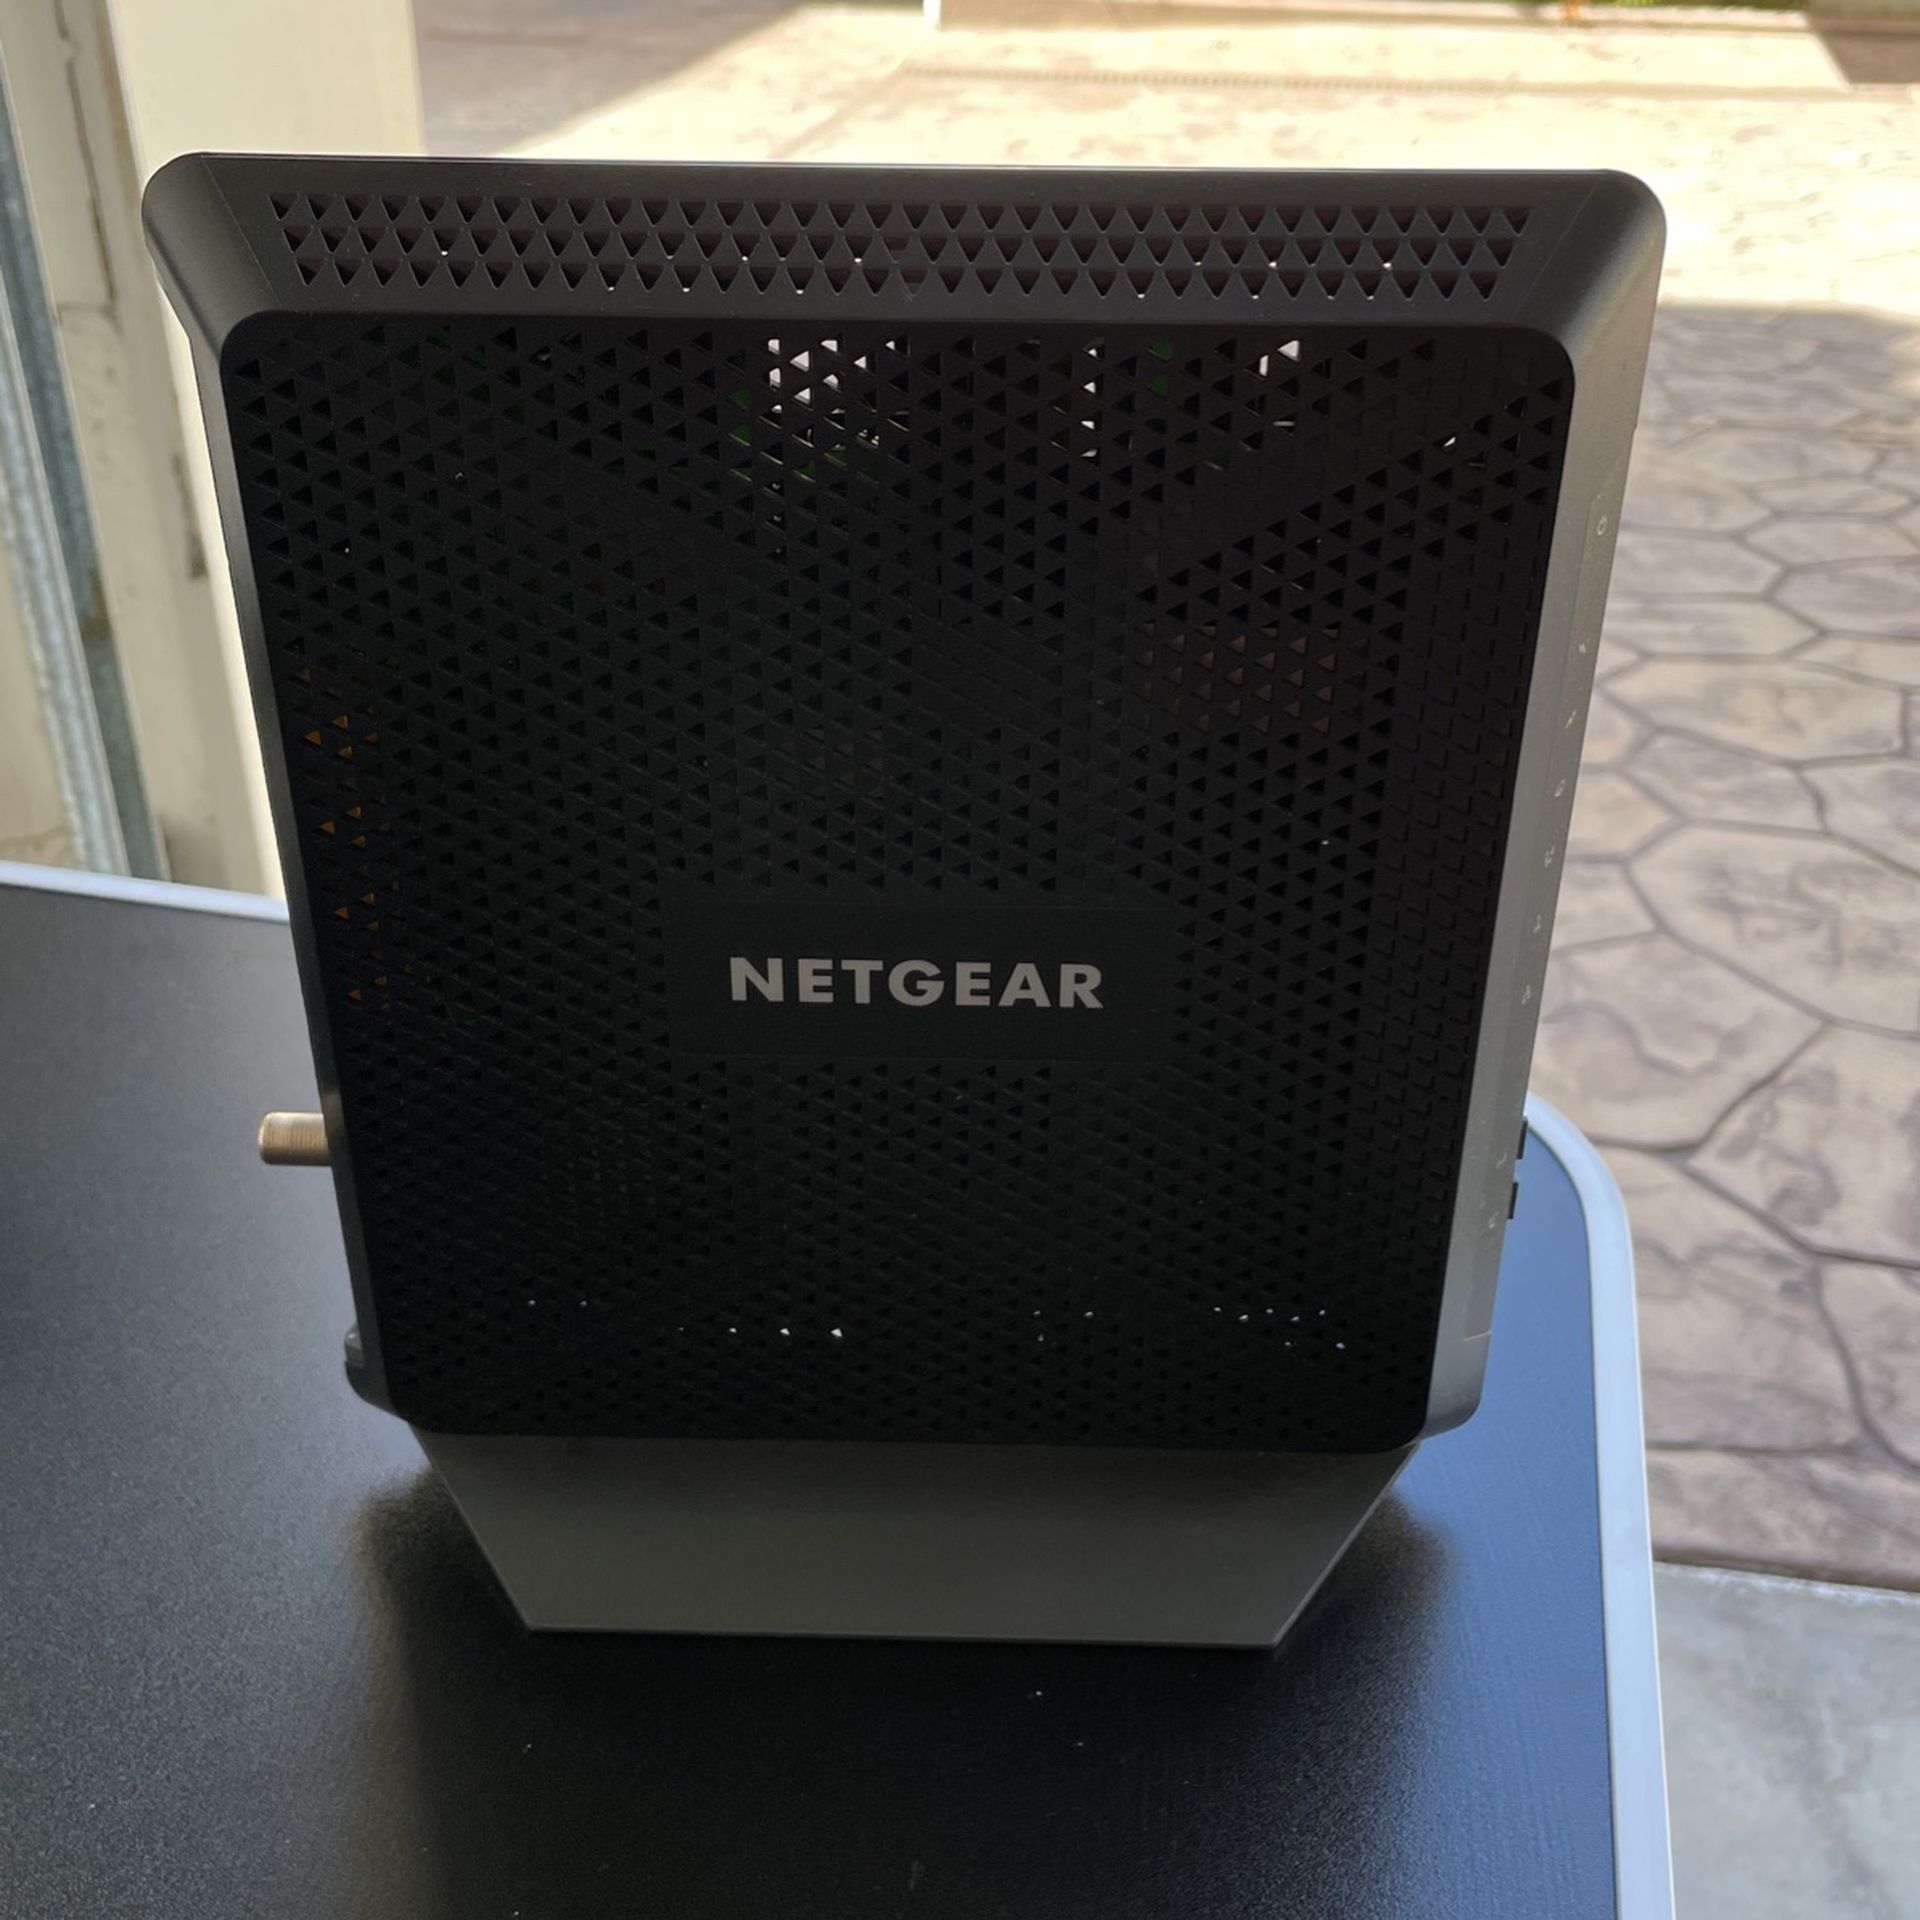 Netgear Nighthawk AC1900 Wifi Cable Modem Router